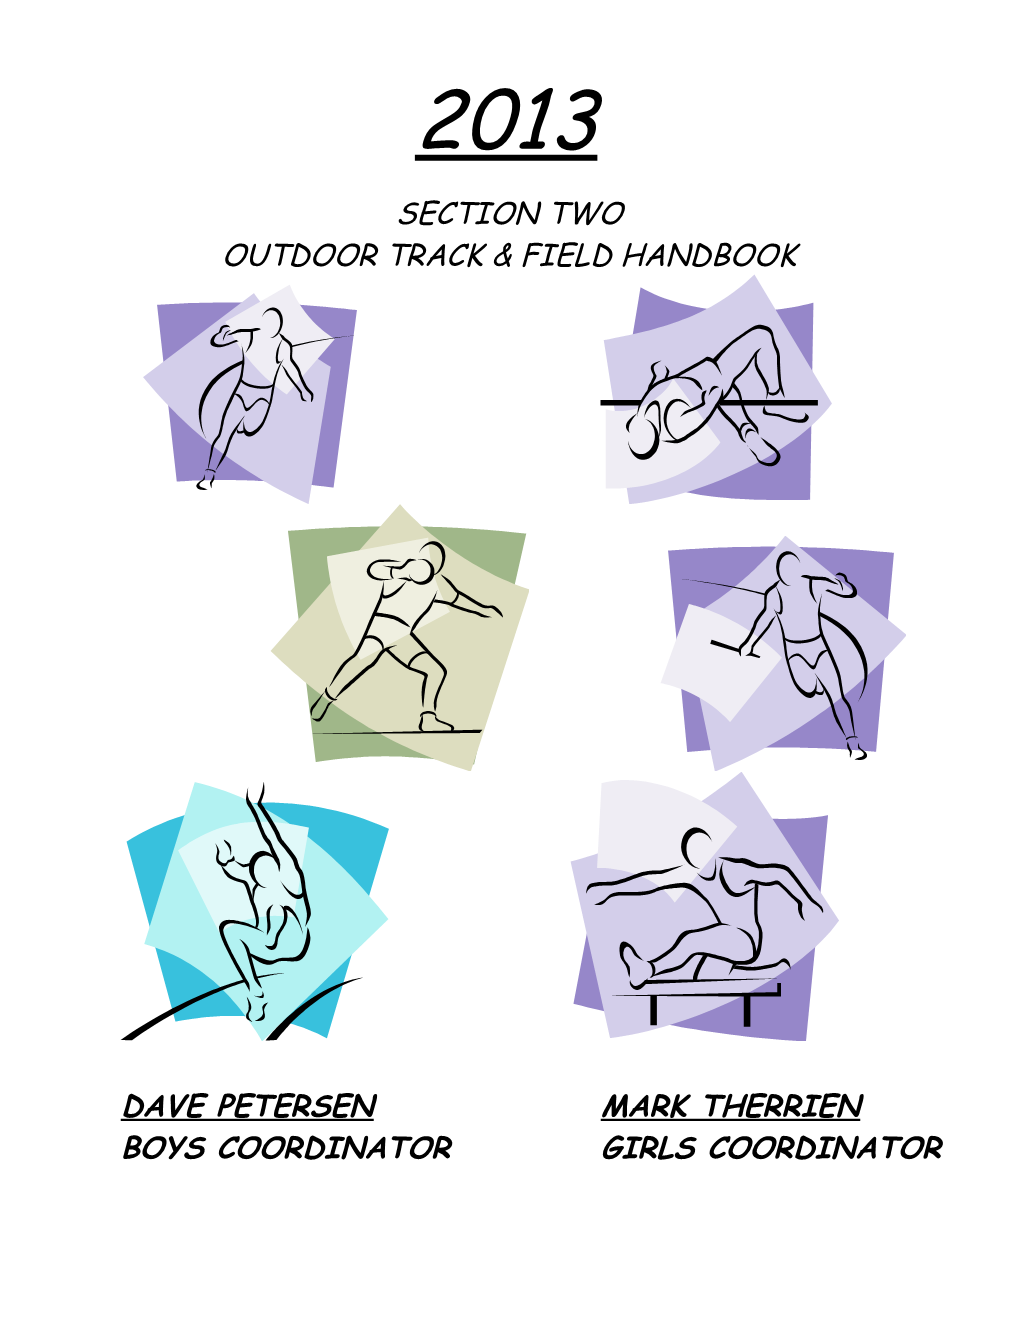 Outdoor Track & Field Handbook